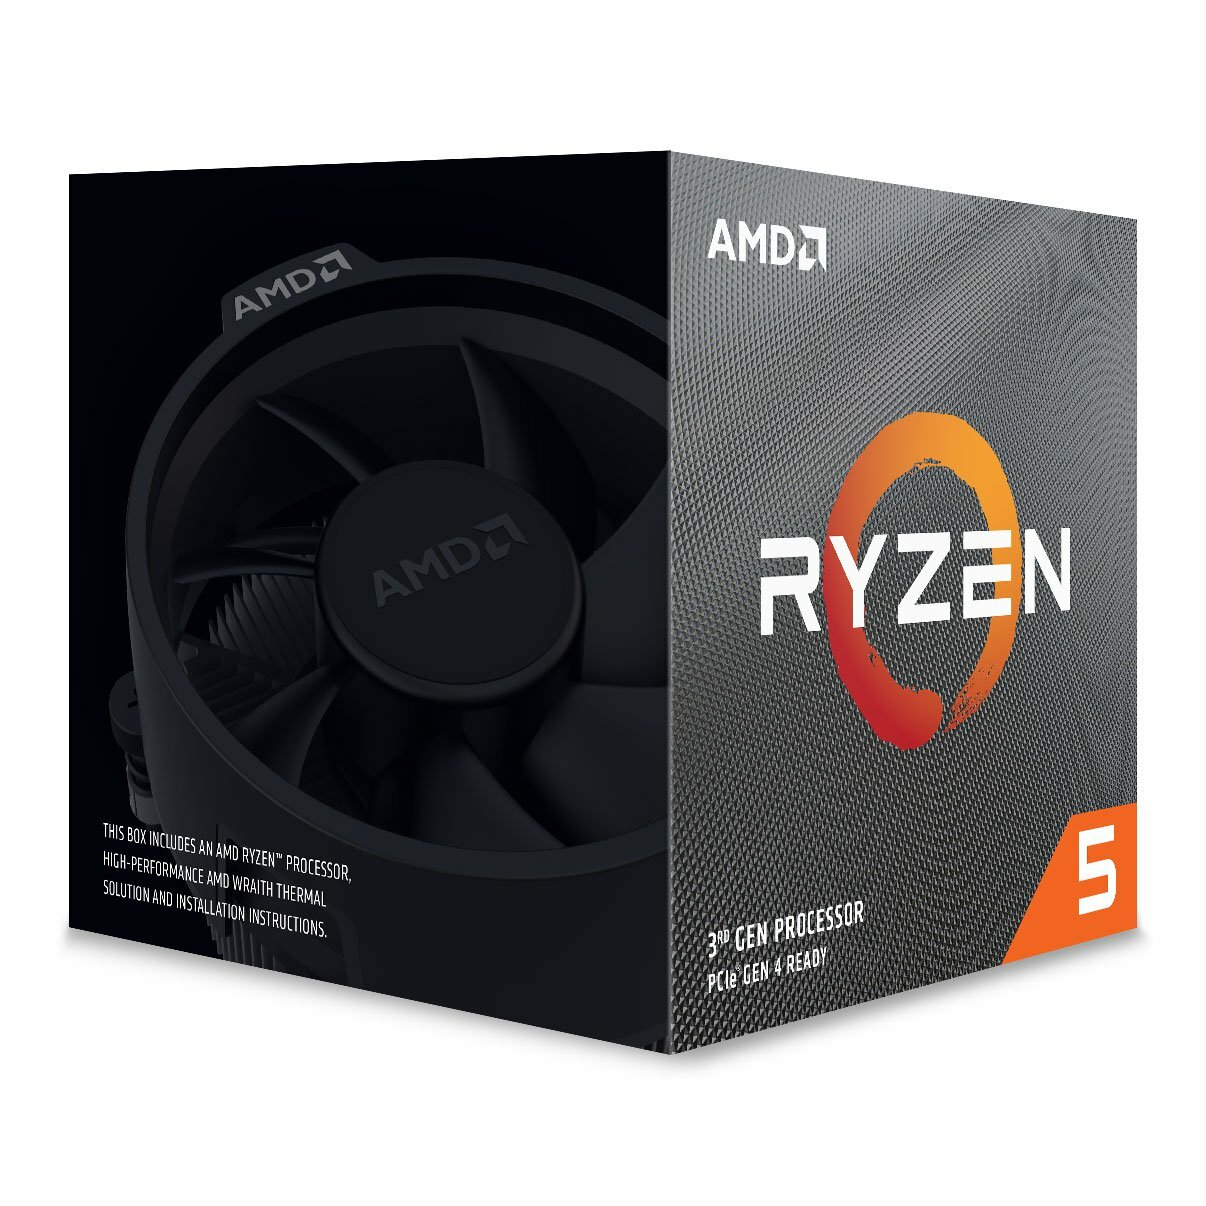 AMD Ryzen™ 5 3500X, Am4, Zen 2, 6 Core, 6 Thread, 3.6Ghz, 4.1Ghz Turbo